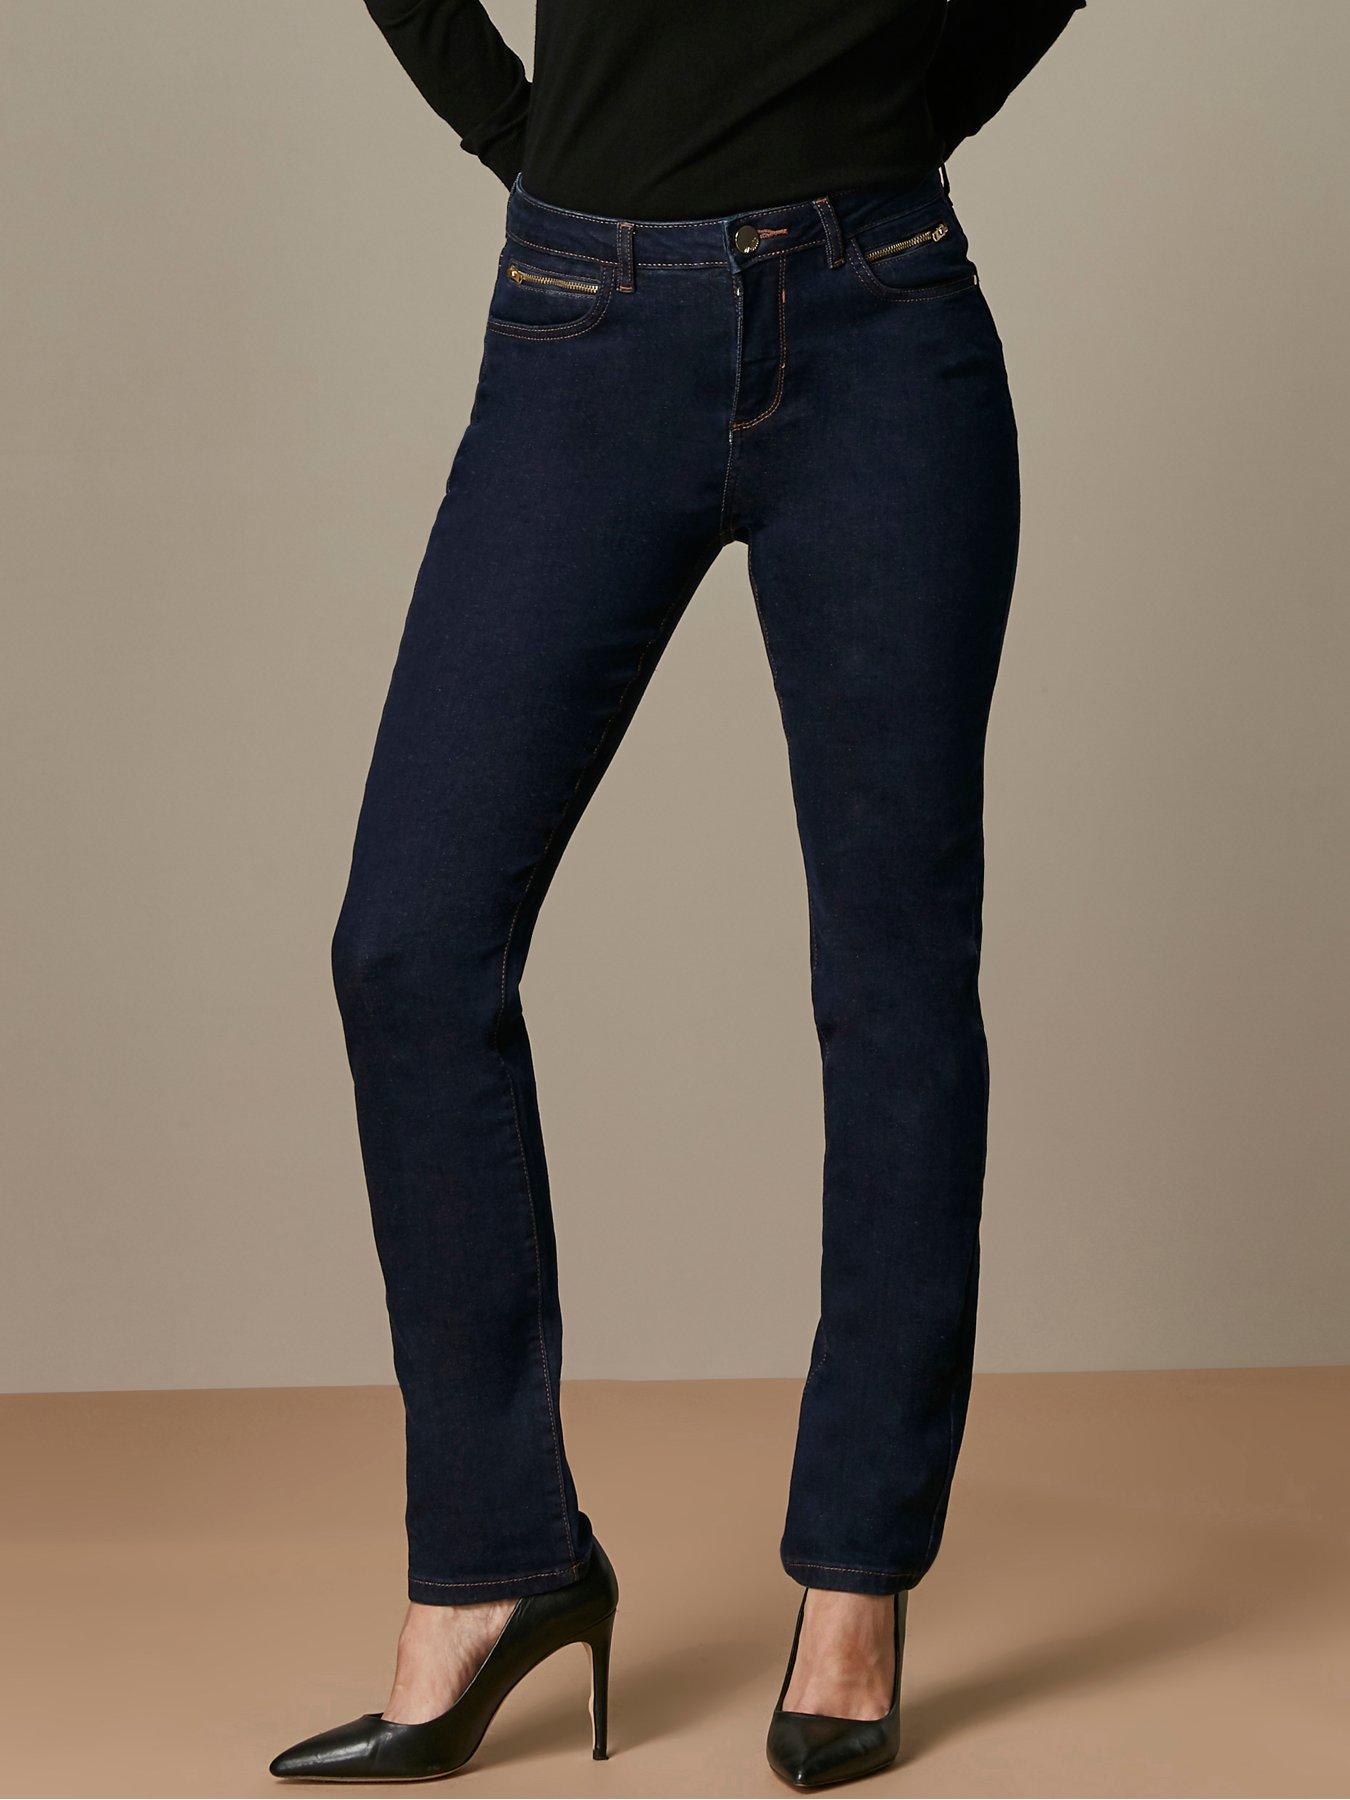 wallis harper petite jeans